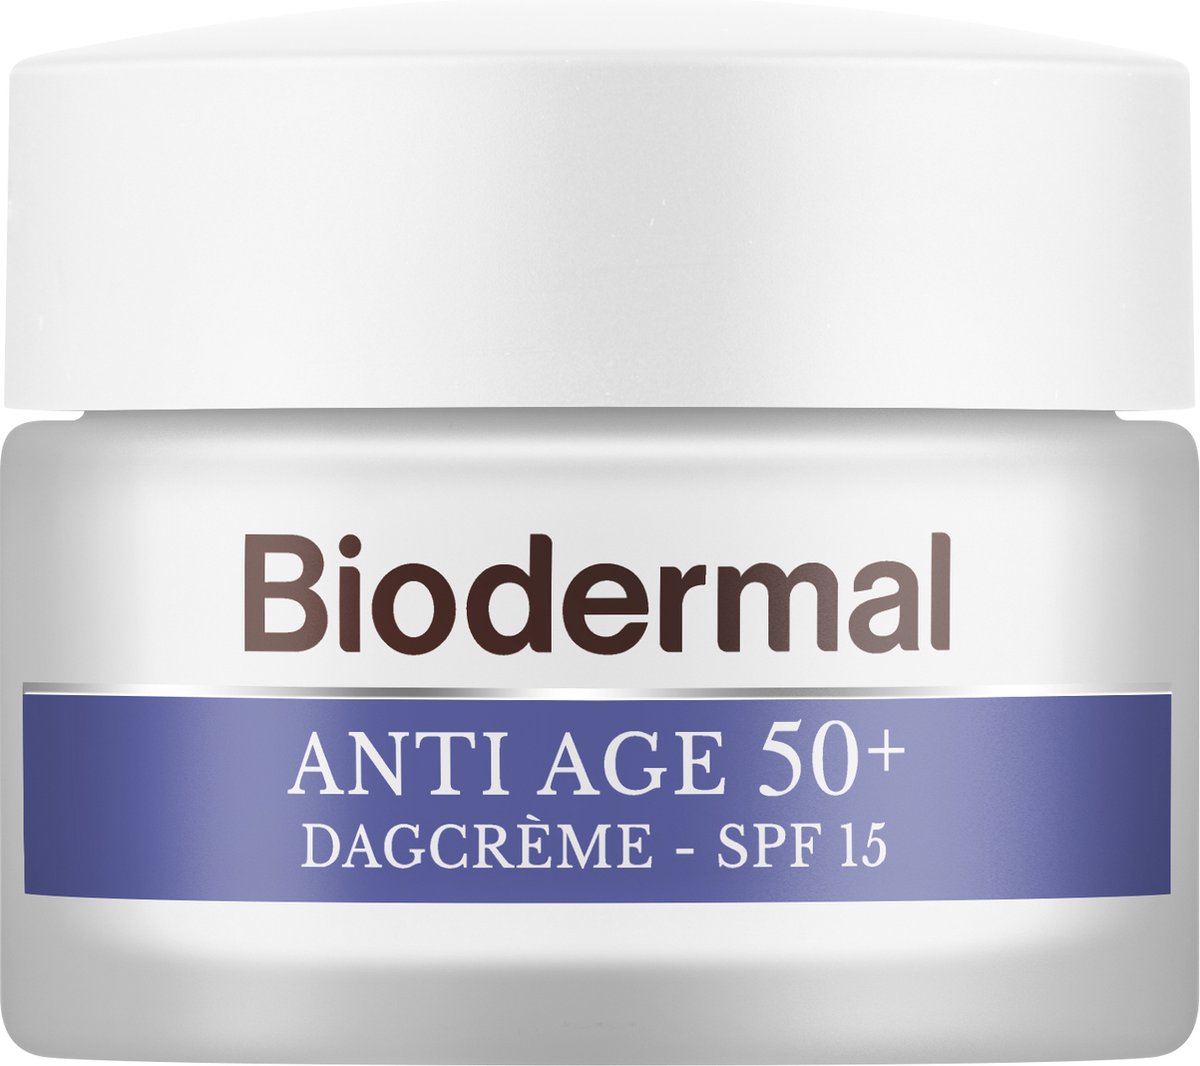 Biodermal Anti Age dagcrème 50+ - Dagcrème met hyaluronzuur en vitamine E - met - SPF15 - Helpt rimpels verminderen - 50ml - Biodermal